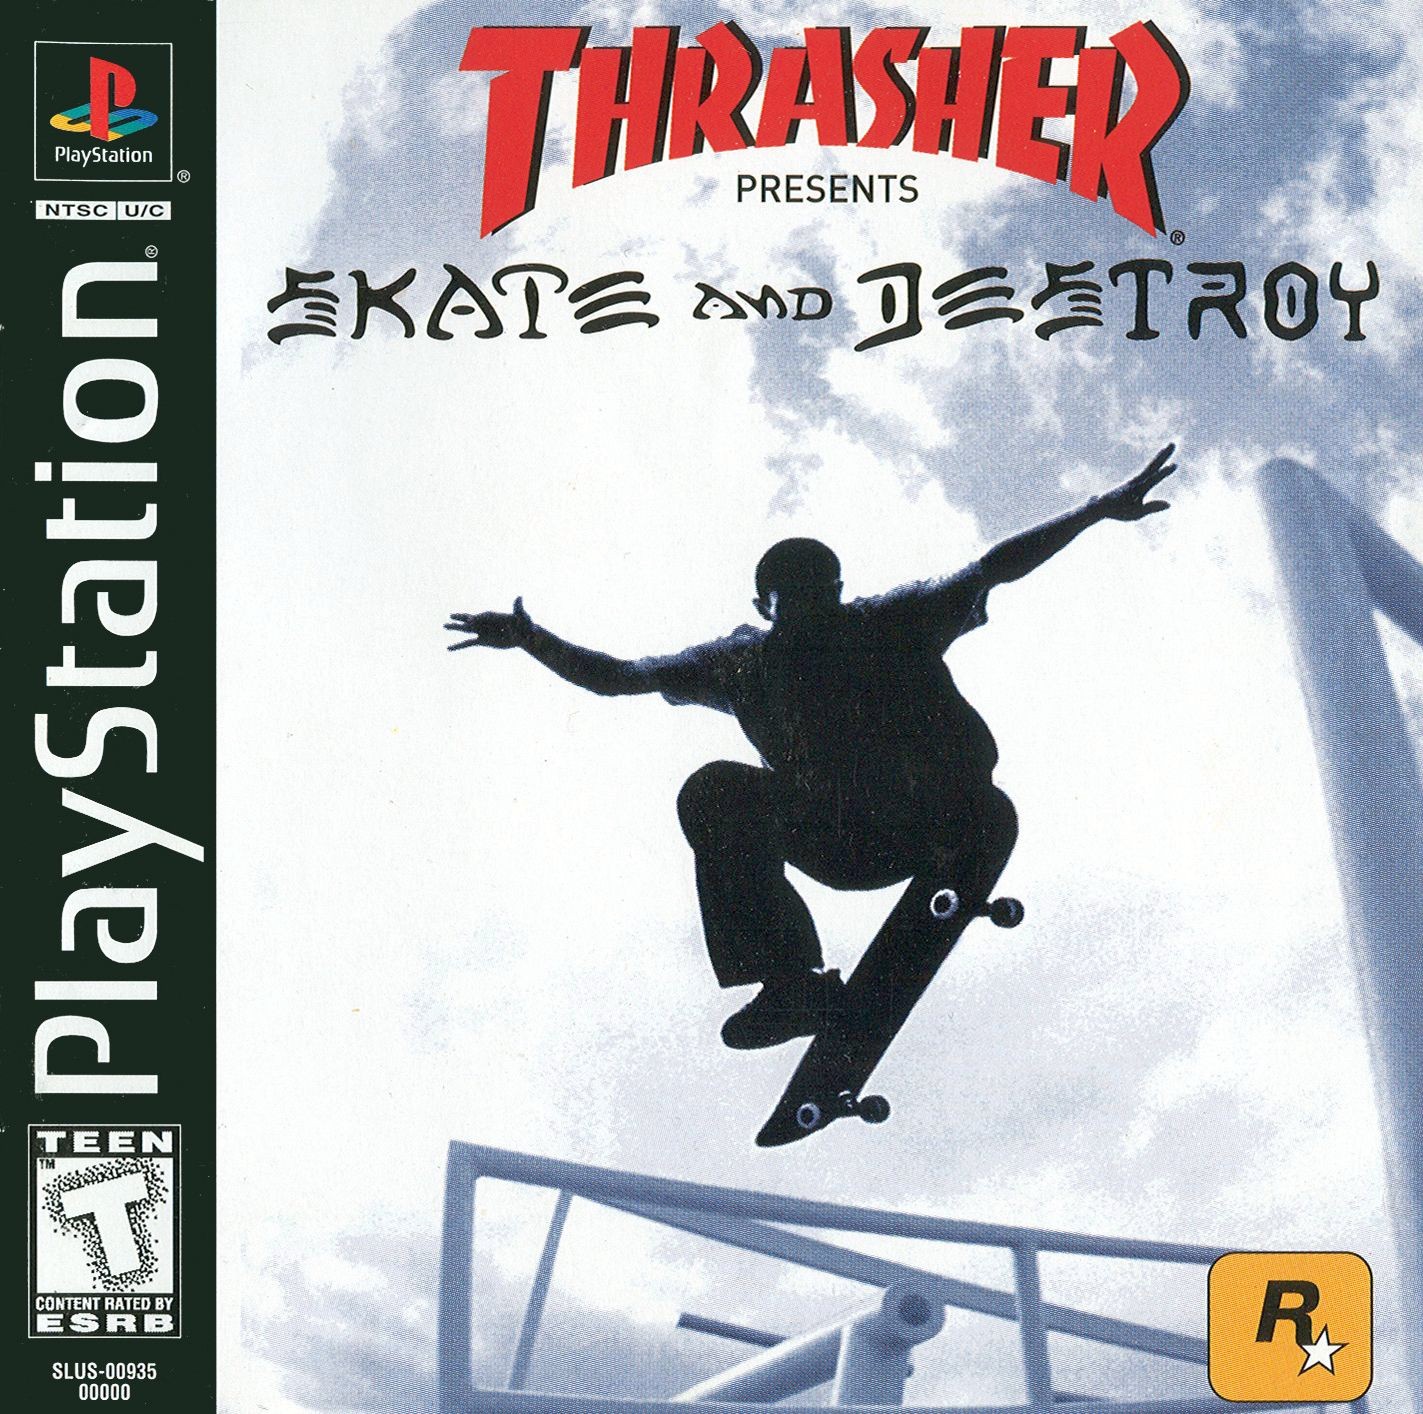 Thrasher Skate And Destroy/PS1